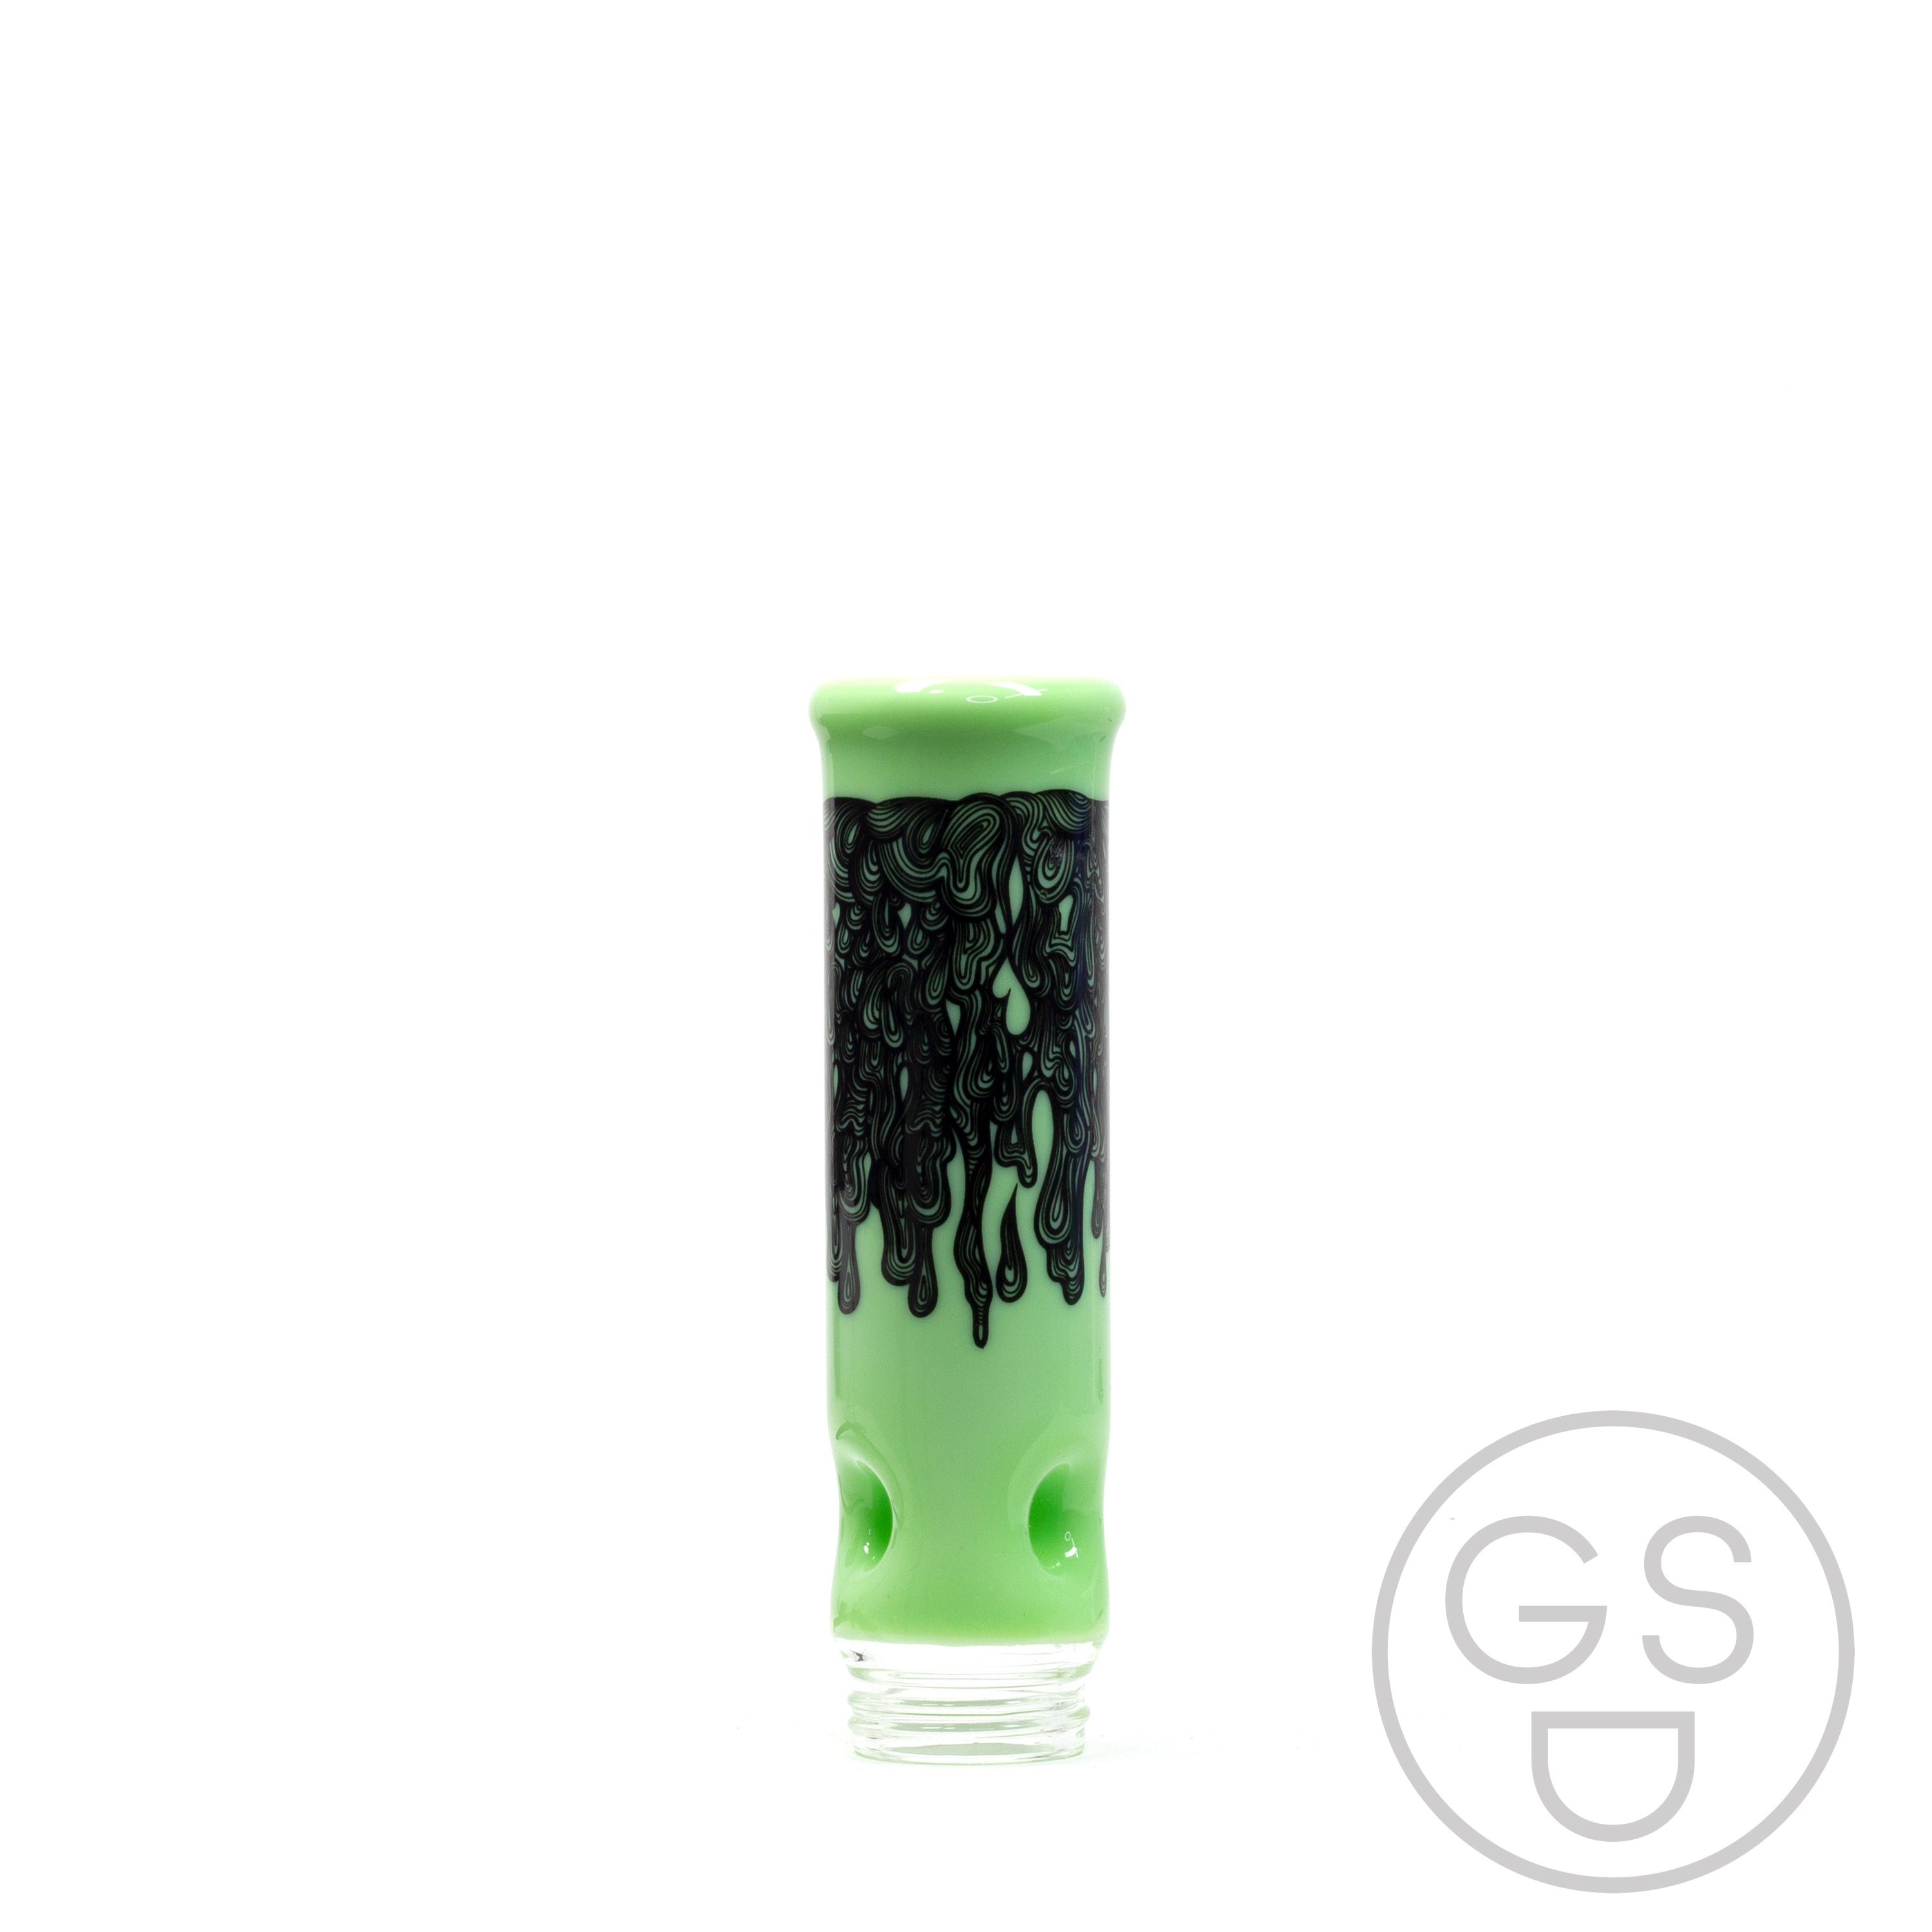 Prism Modular Waterpipe Standard Mouthpiece - Drippy / Key Lime